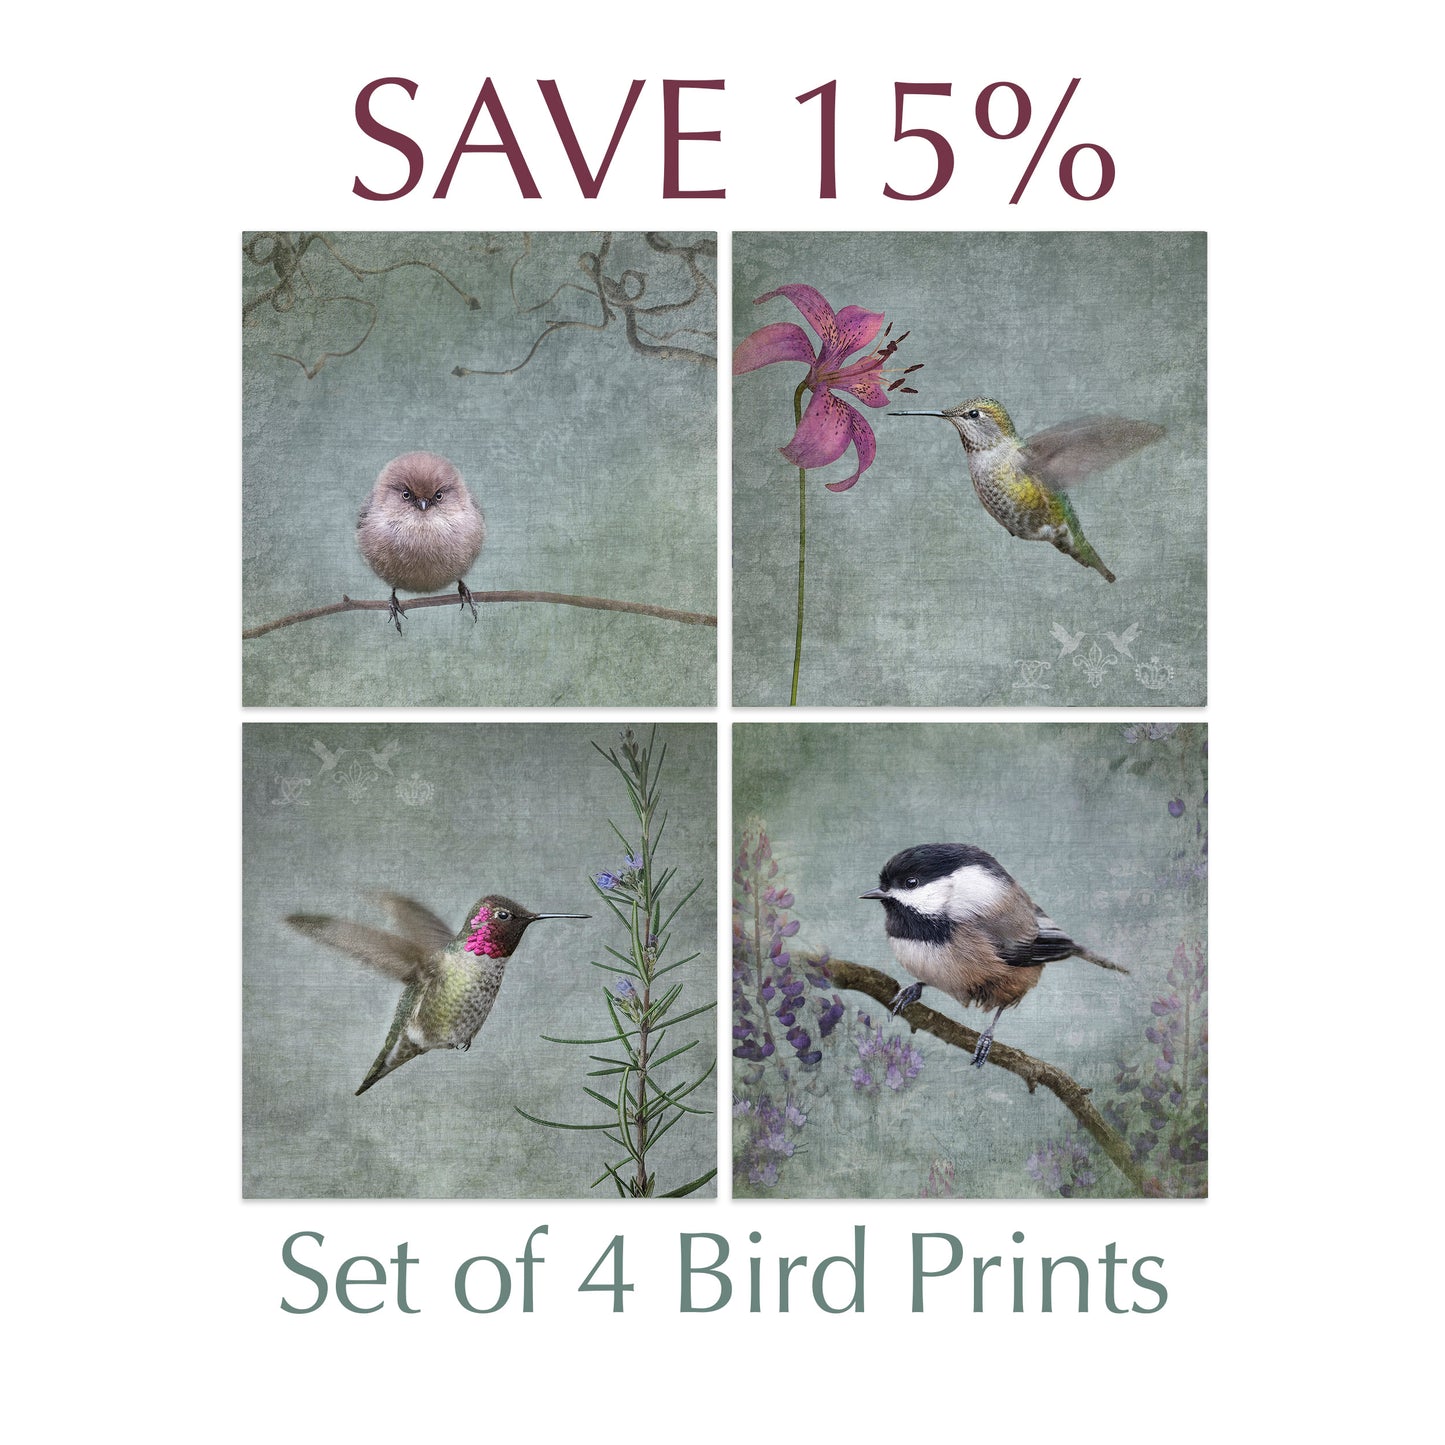 FUCHSIA HUMMINGBIRD - Fine Art Print, Garden Birds Series